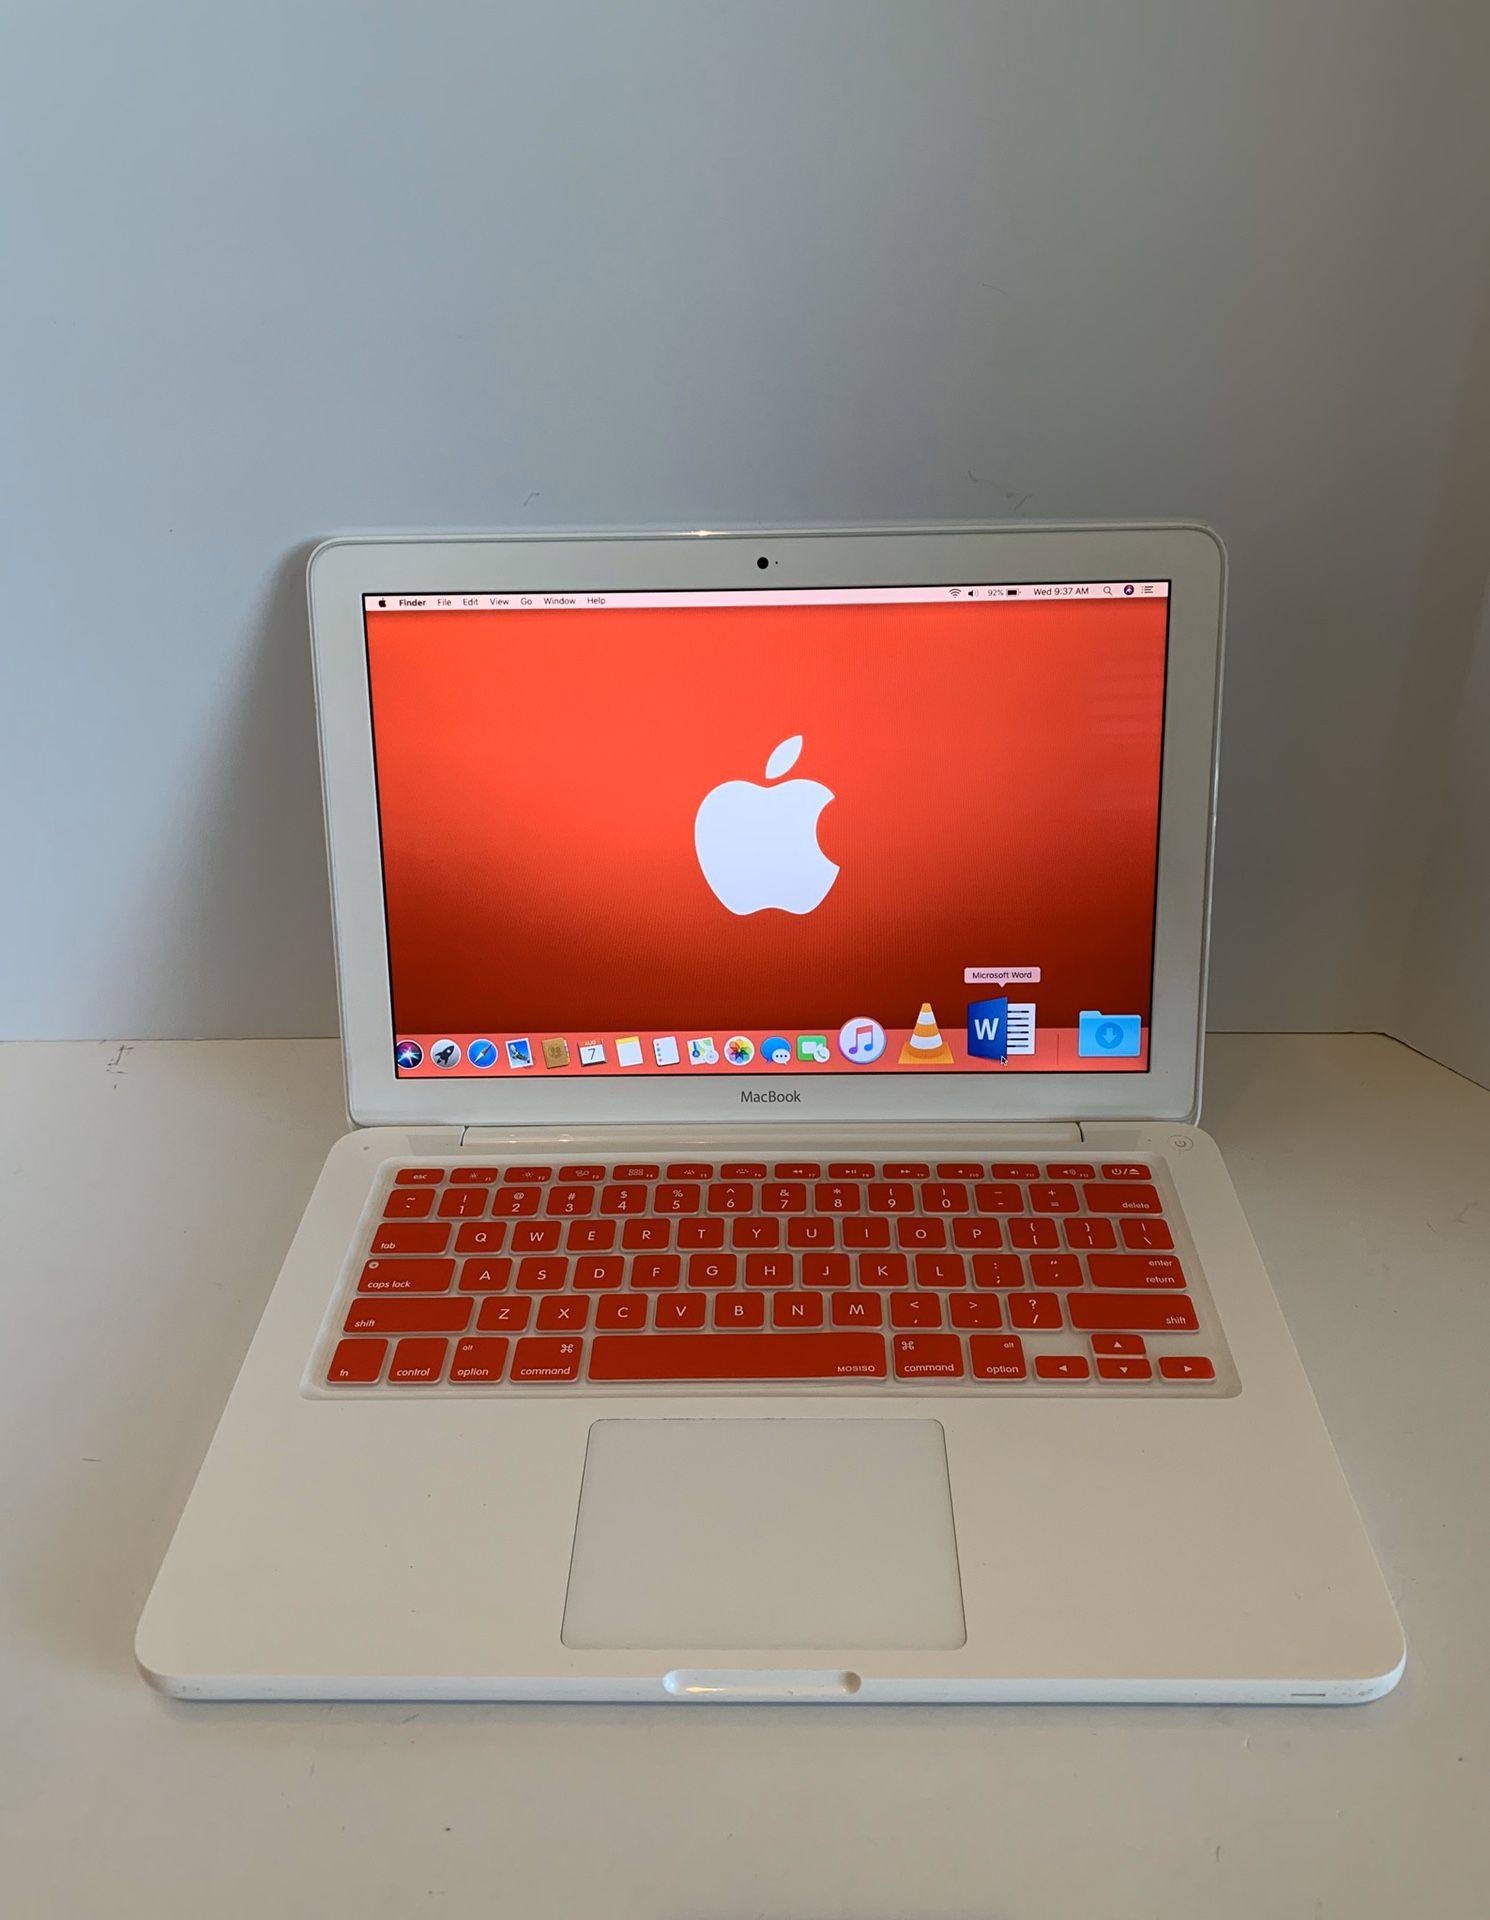 MacBook (13-inch 2010)